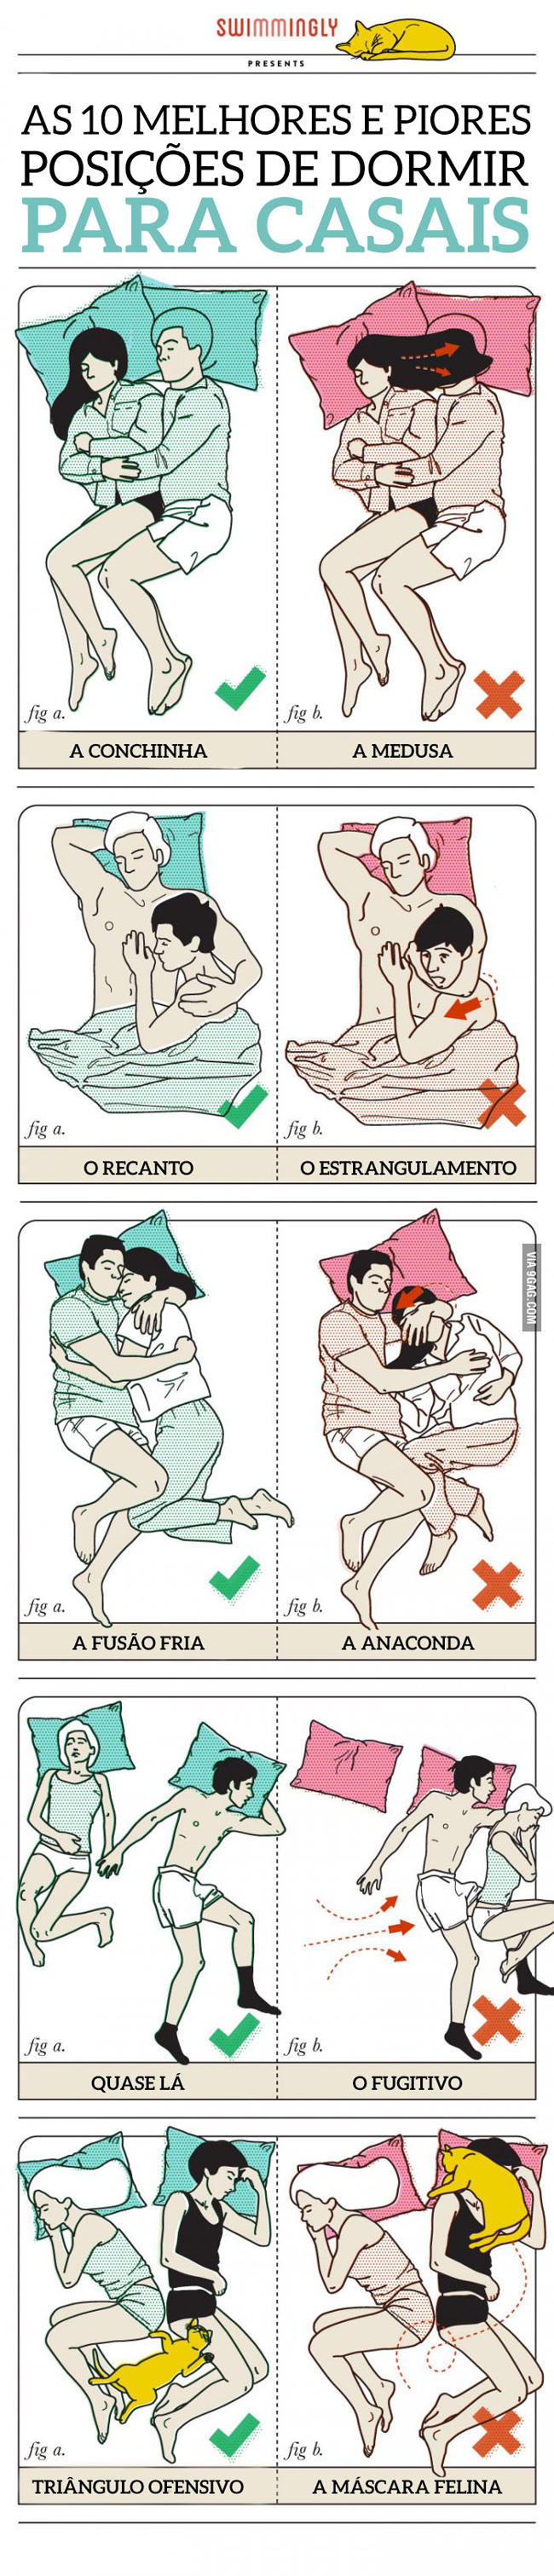 posições dormir casal